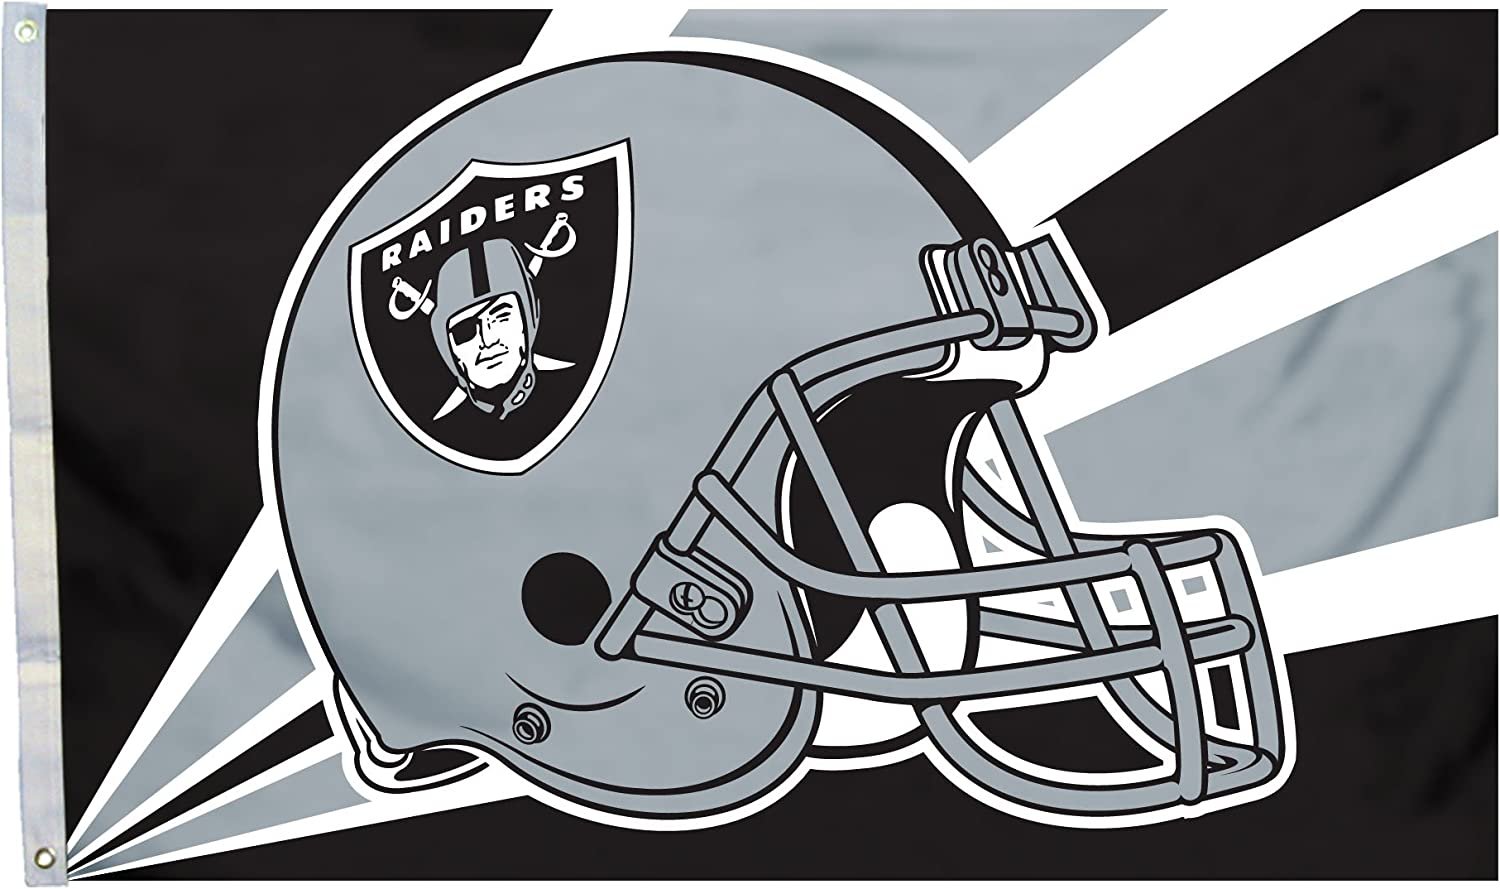 Las Vegas Raiders 3' x 5' Flag Banner with Metal Grommets Outdoor Helmet Design